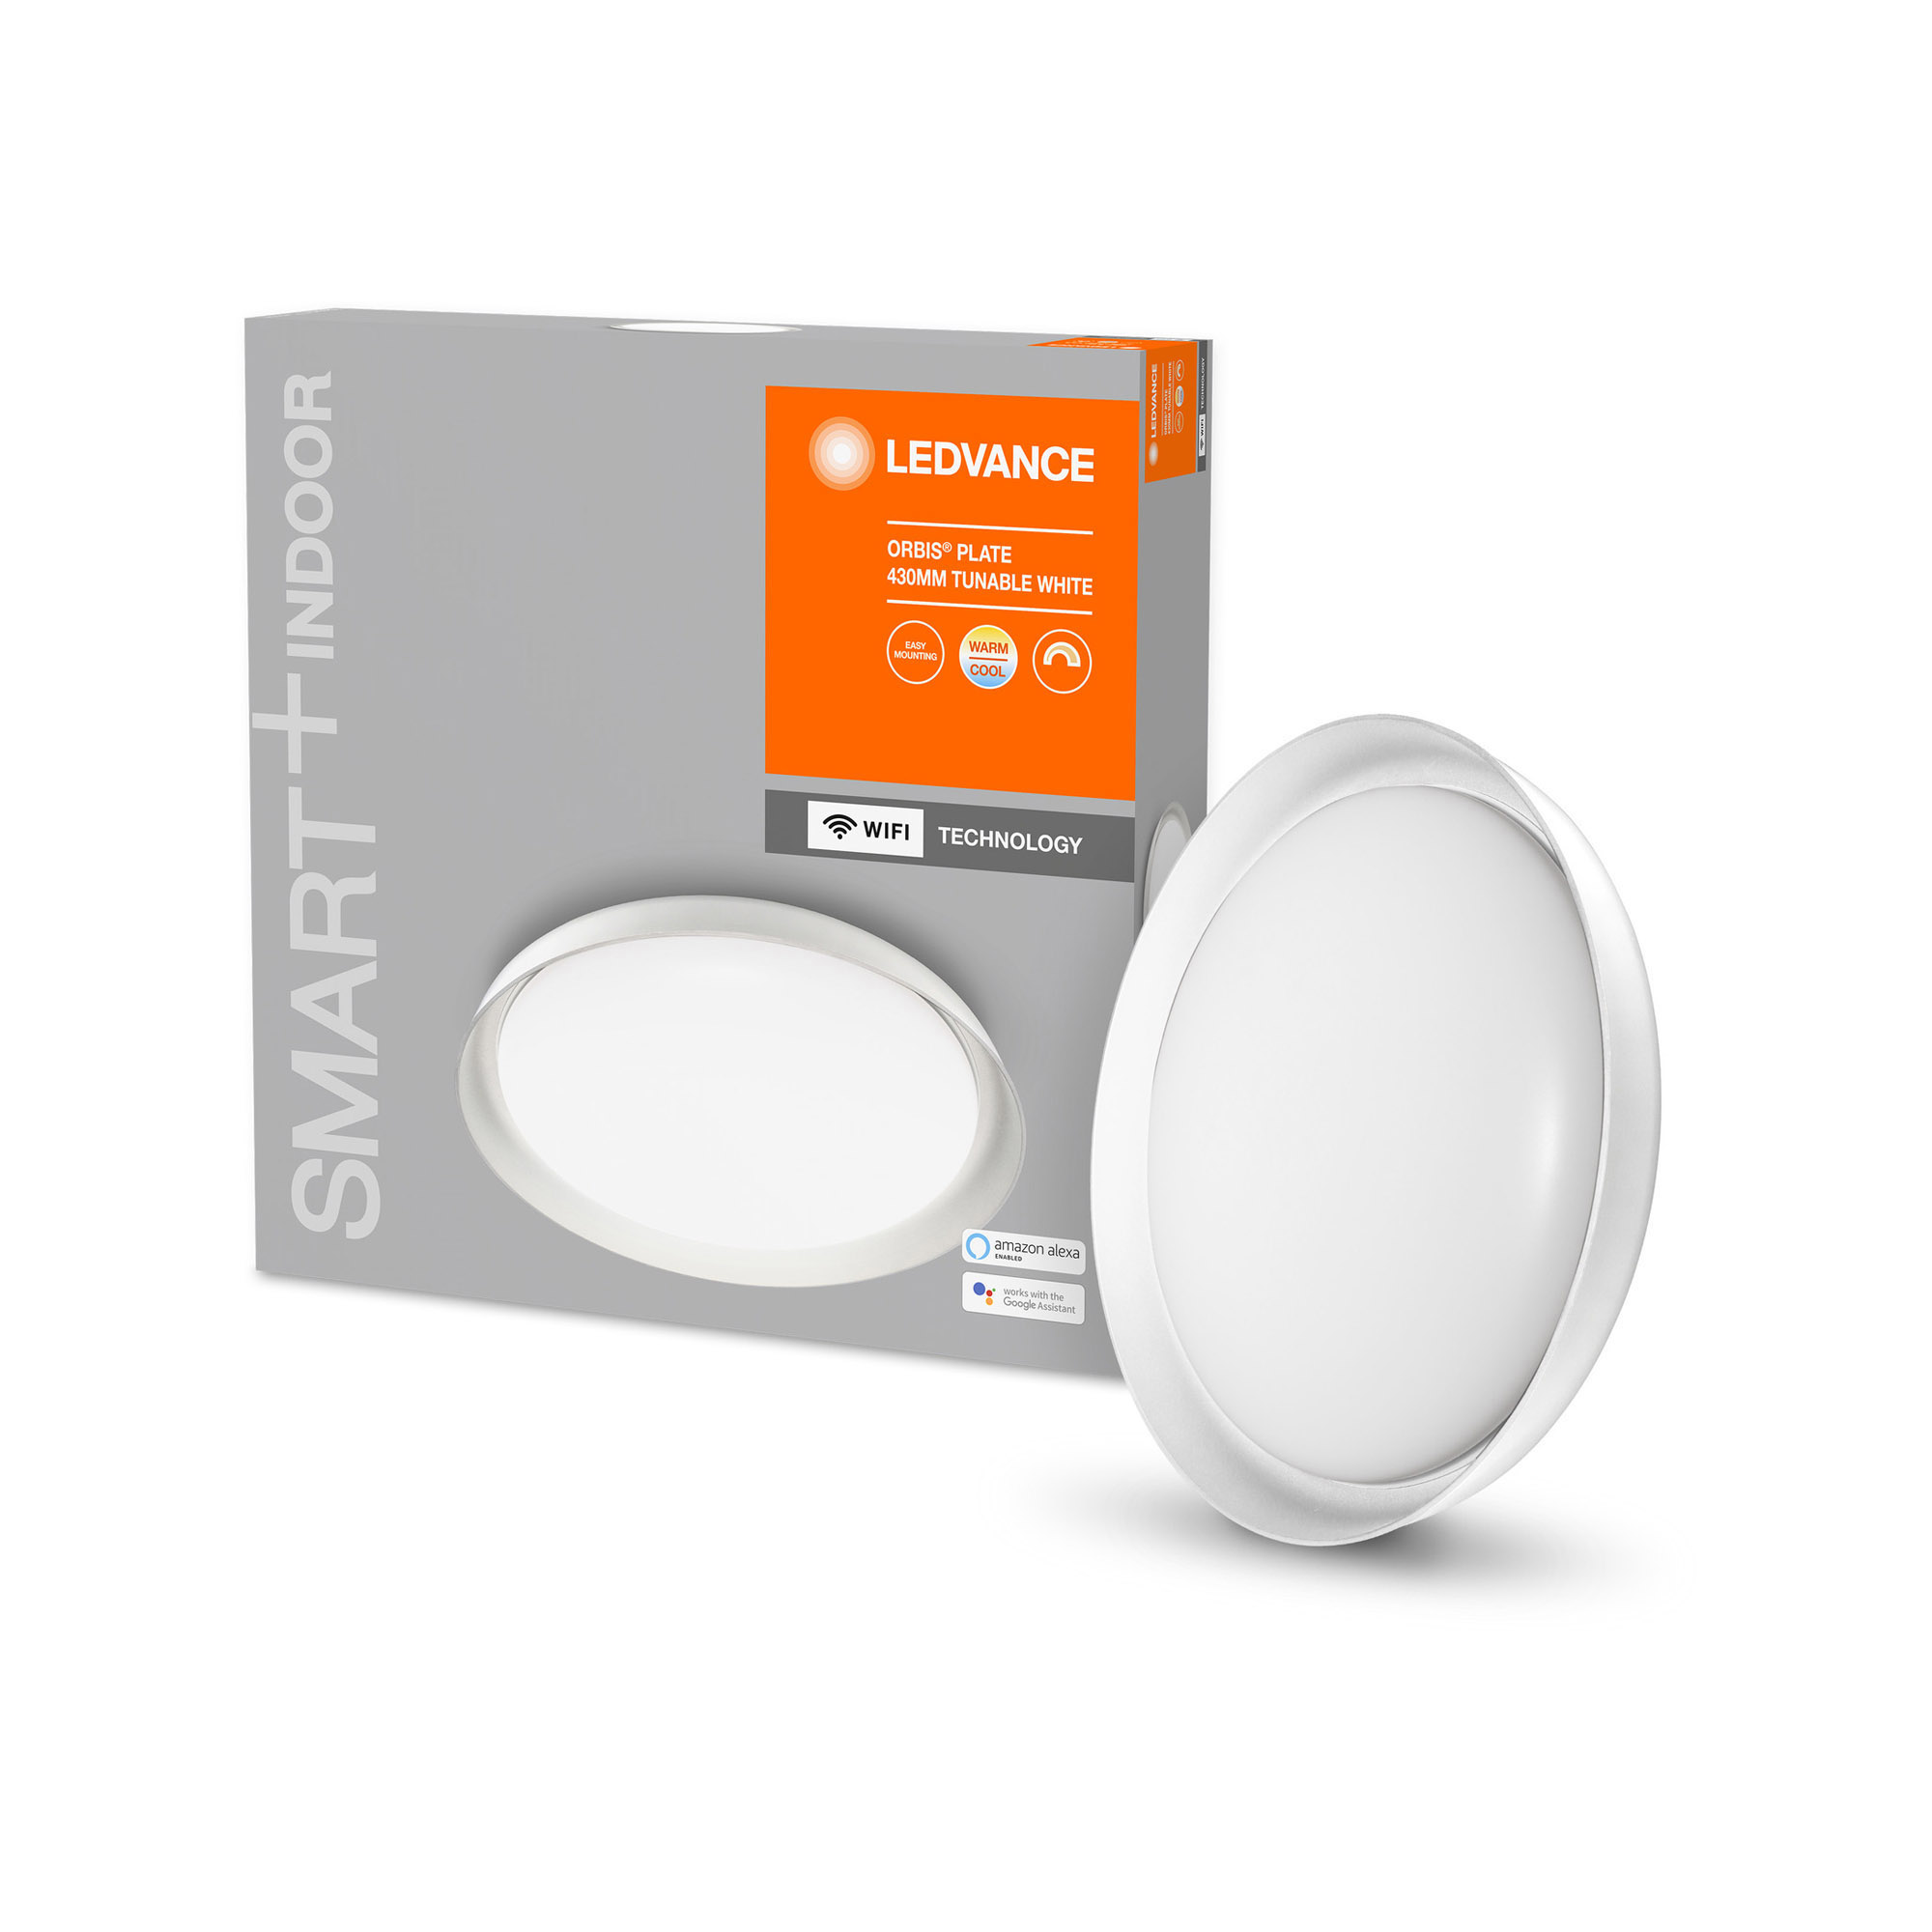 LEDVANCE SMART+ WiFi Tunable White LED Ceiling Light ORBIS Plate 430mm white 2500lm